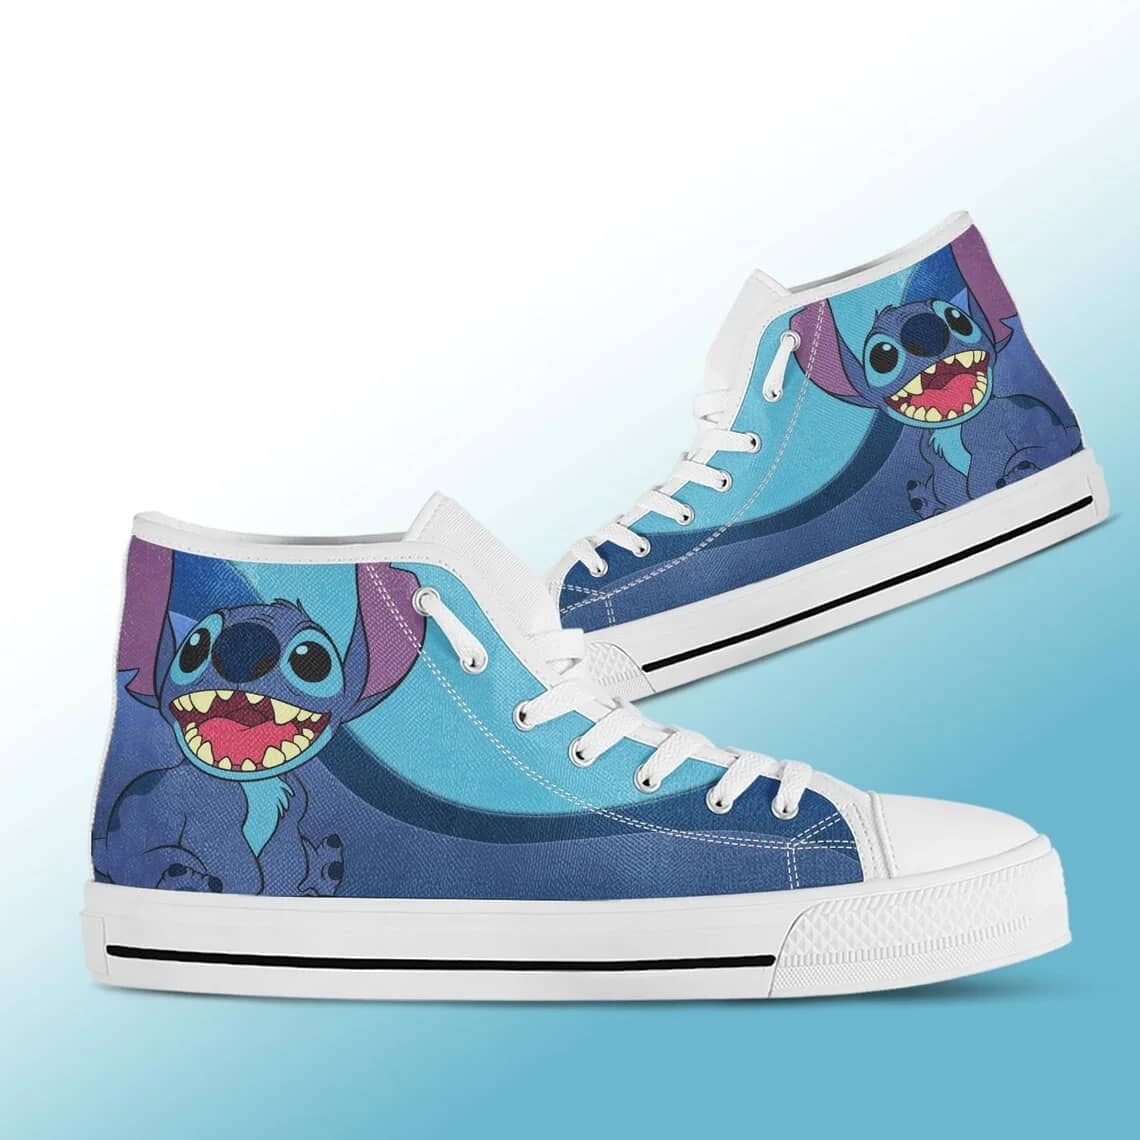 Stitch Style 7 Amazon Custom Disney High Top Shoes